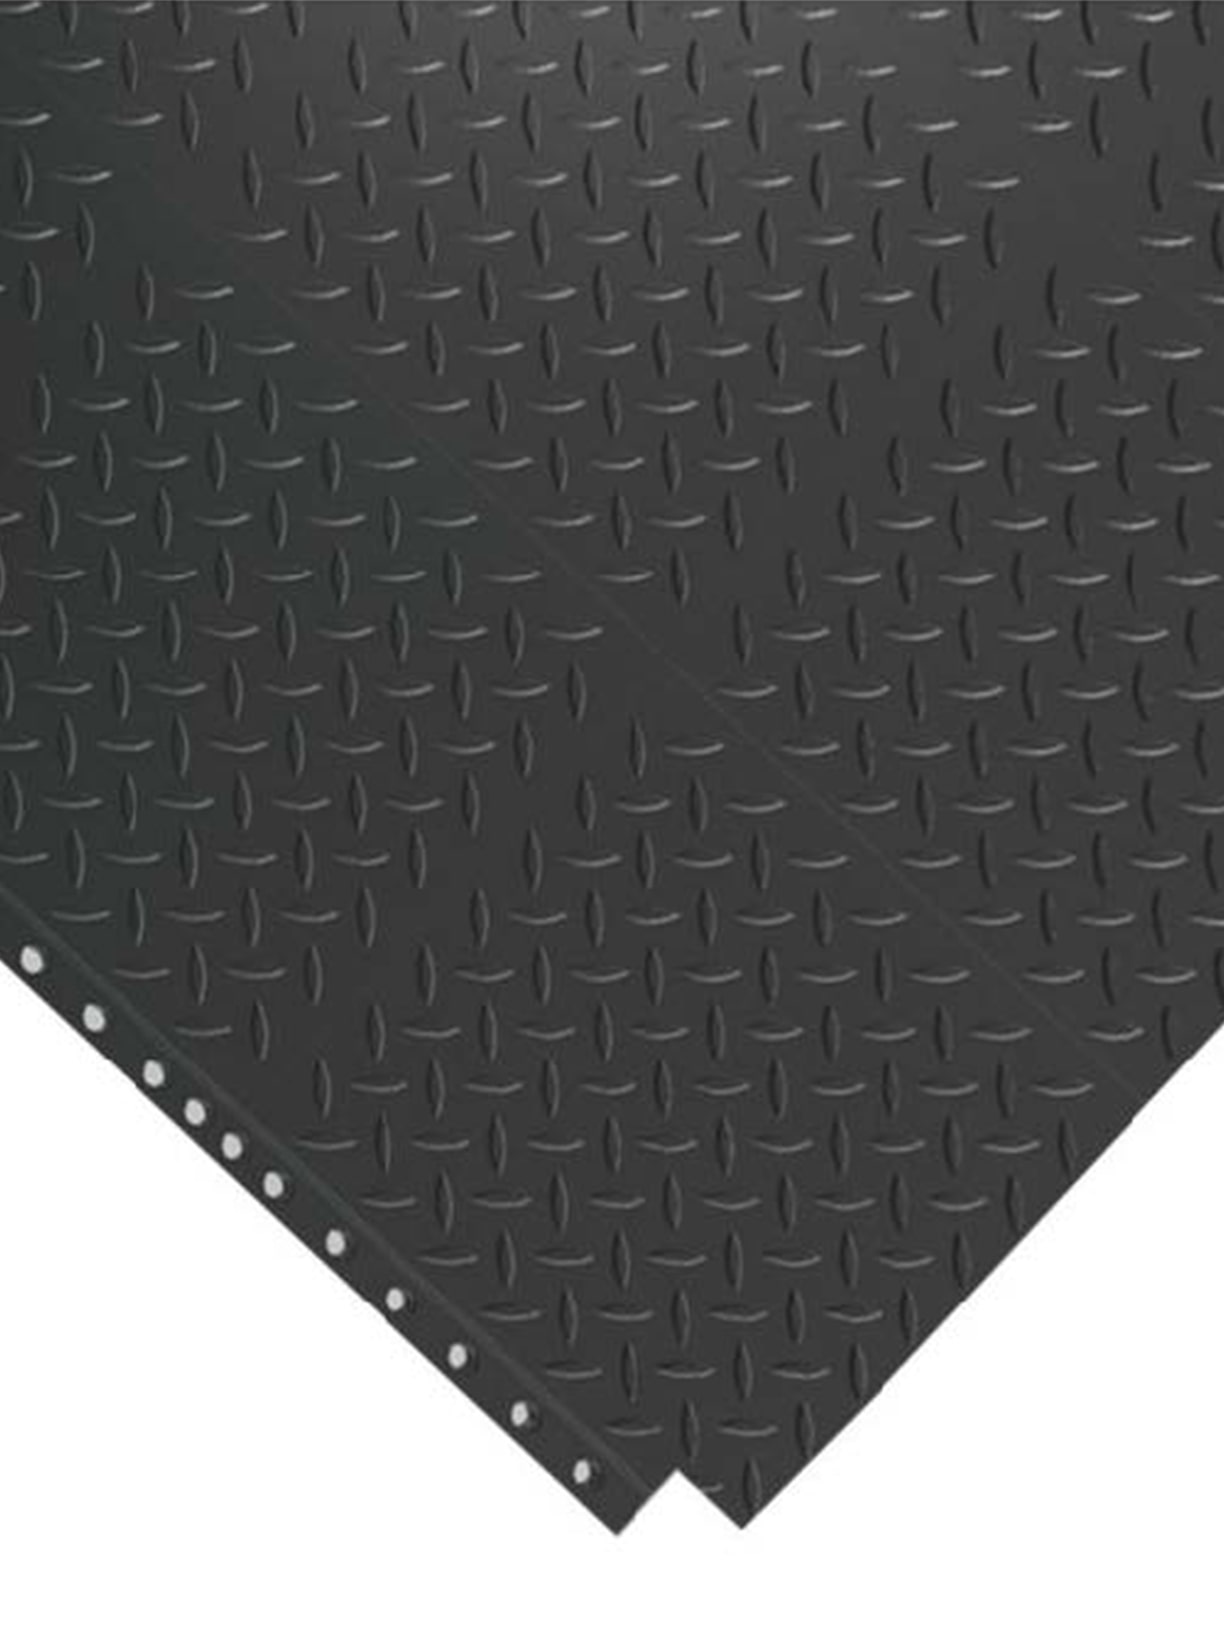 ErgoTech Products: Tehnoguma - Anti-Fatigue Floor mats 1